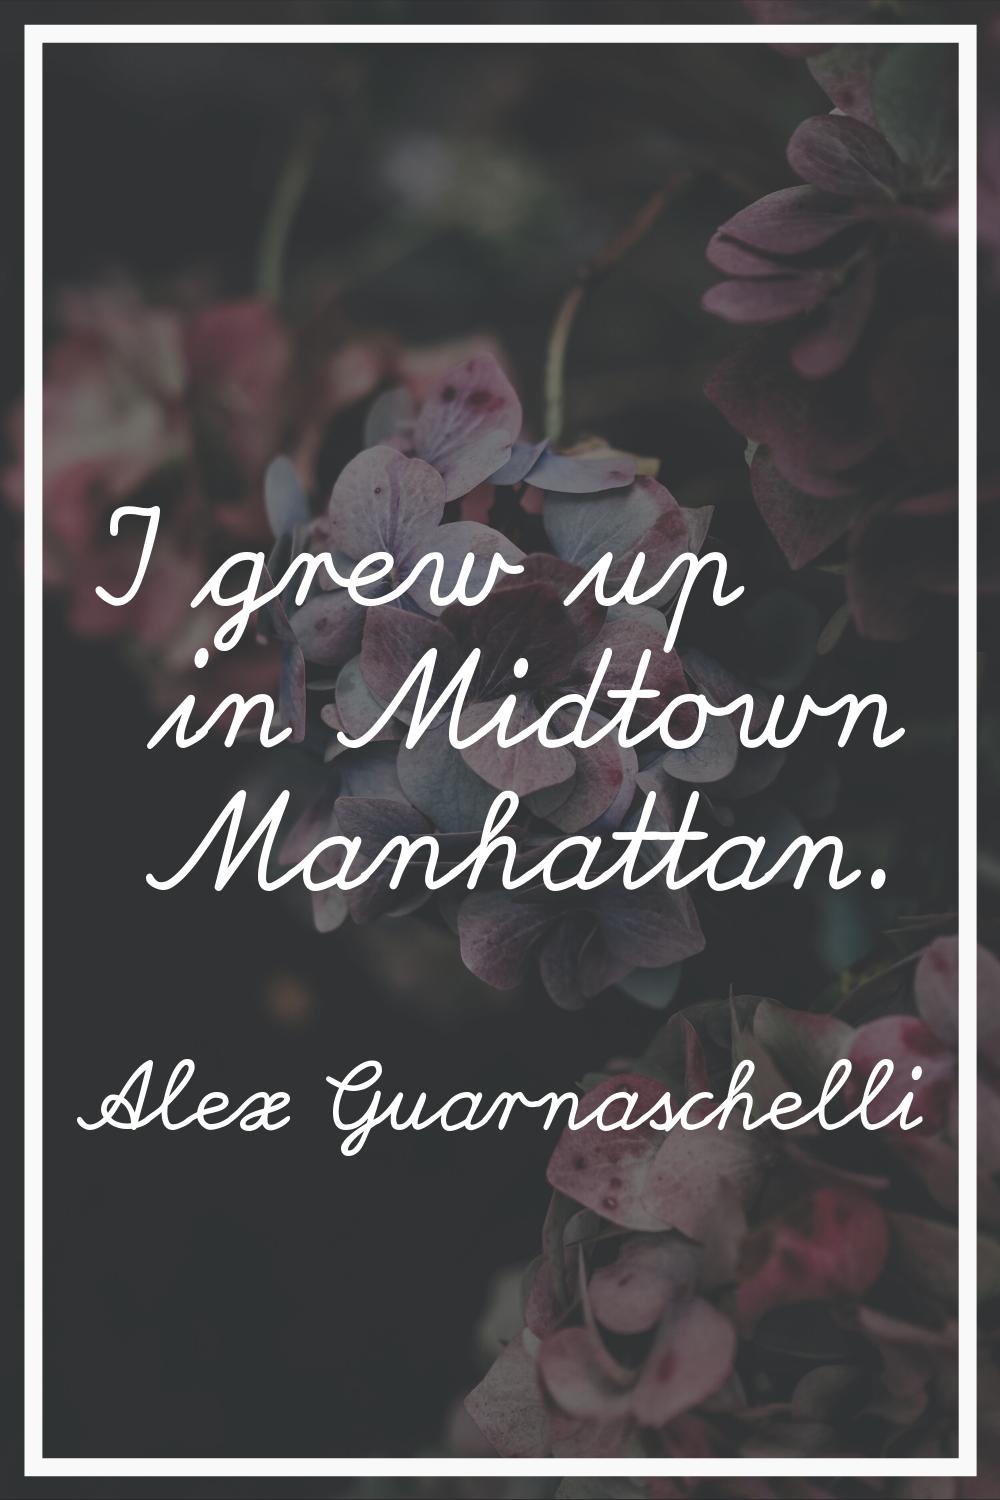 I grew up in Midtown Manhattan.